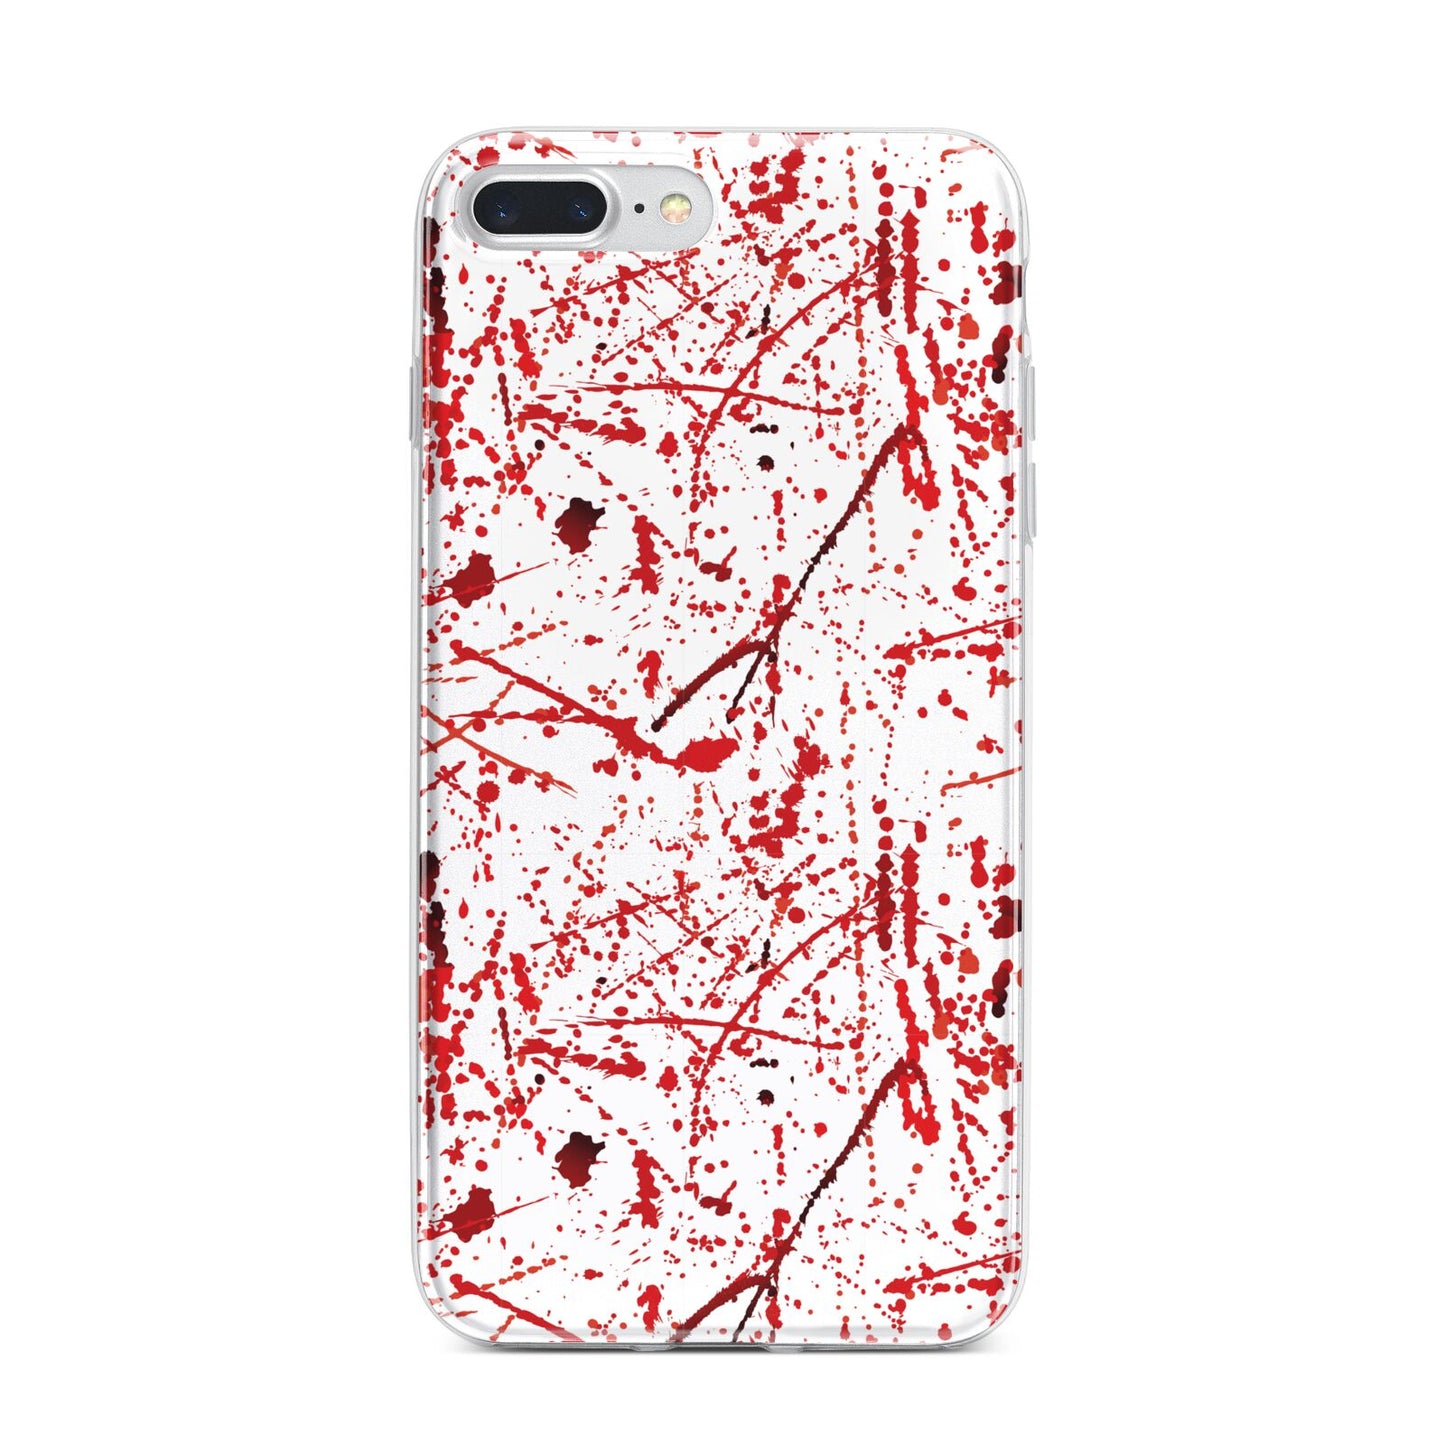 Blood Splatter iPhone 7 Plus Bumper Case on Silver iPhone